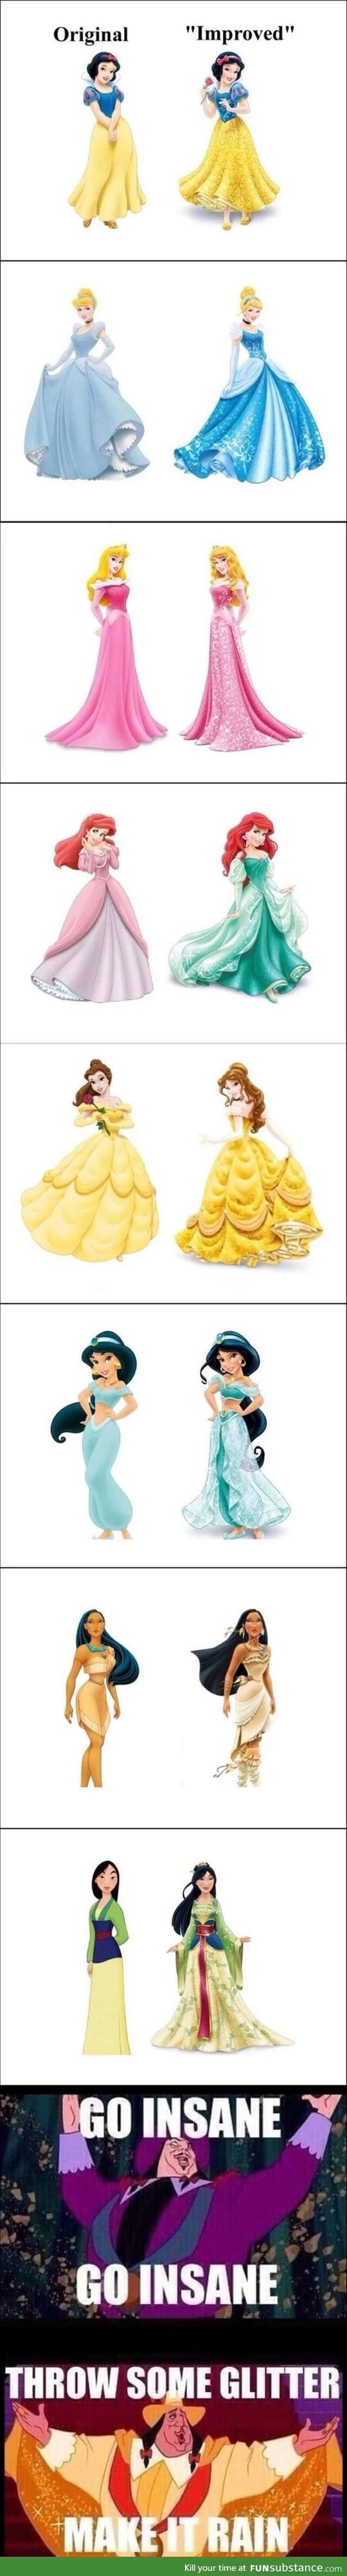 Improved Versions of Disney Princesses